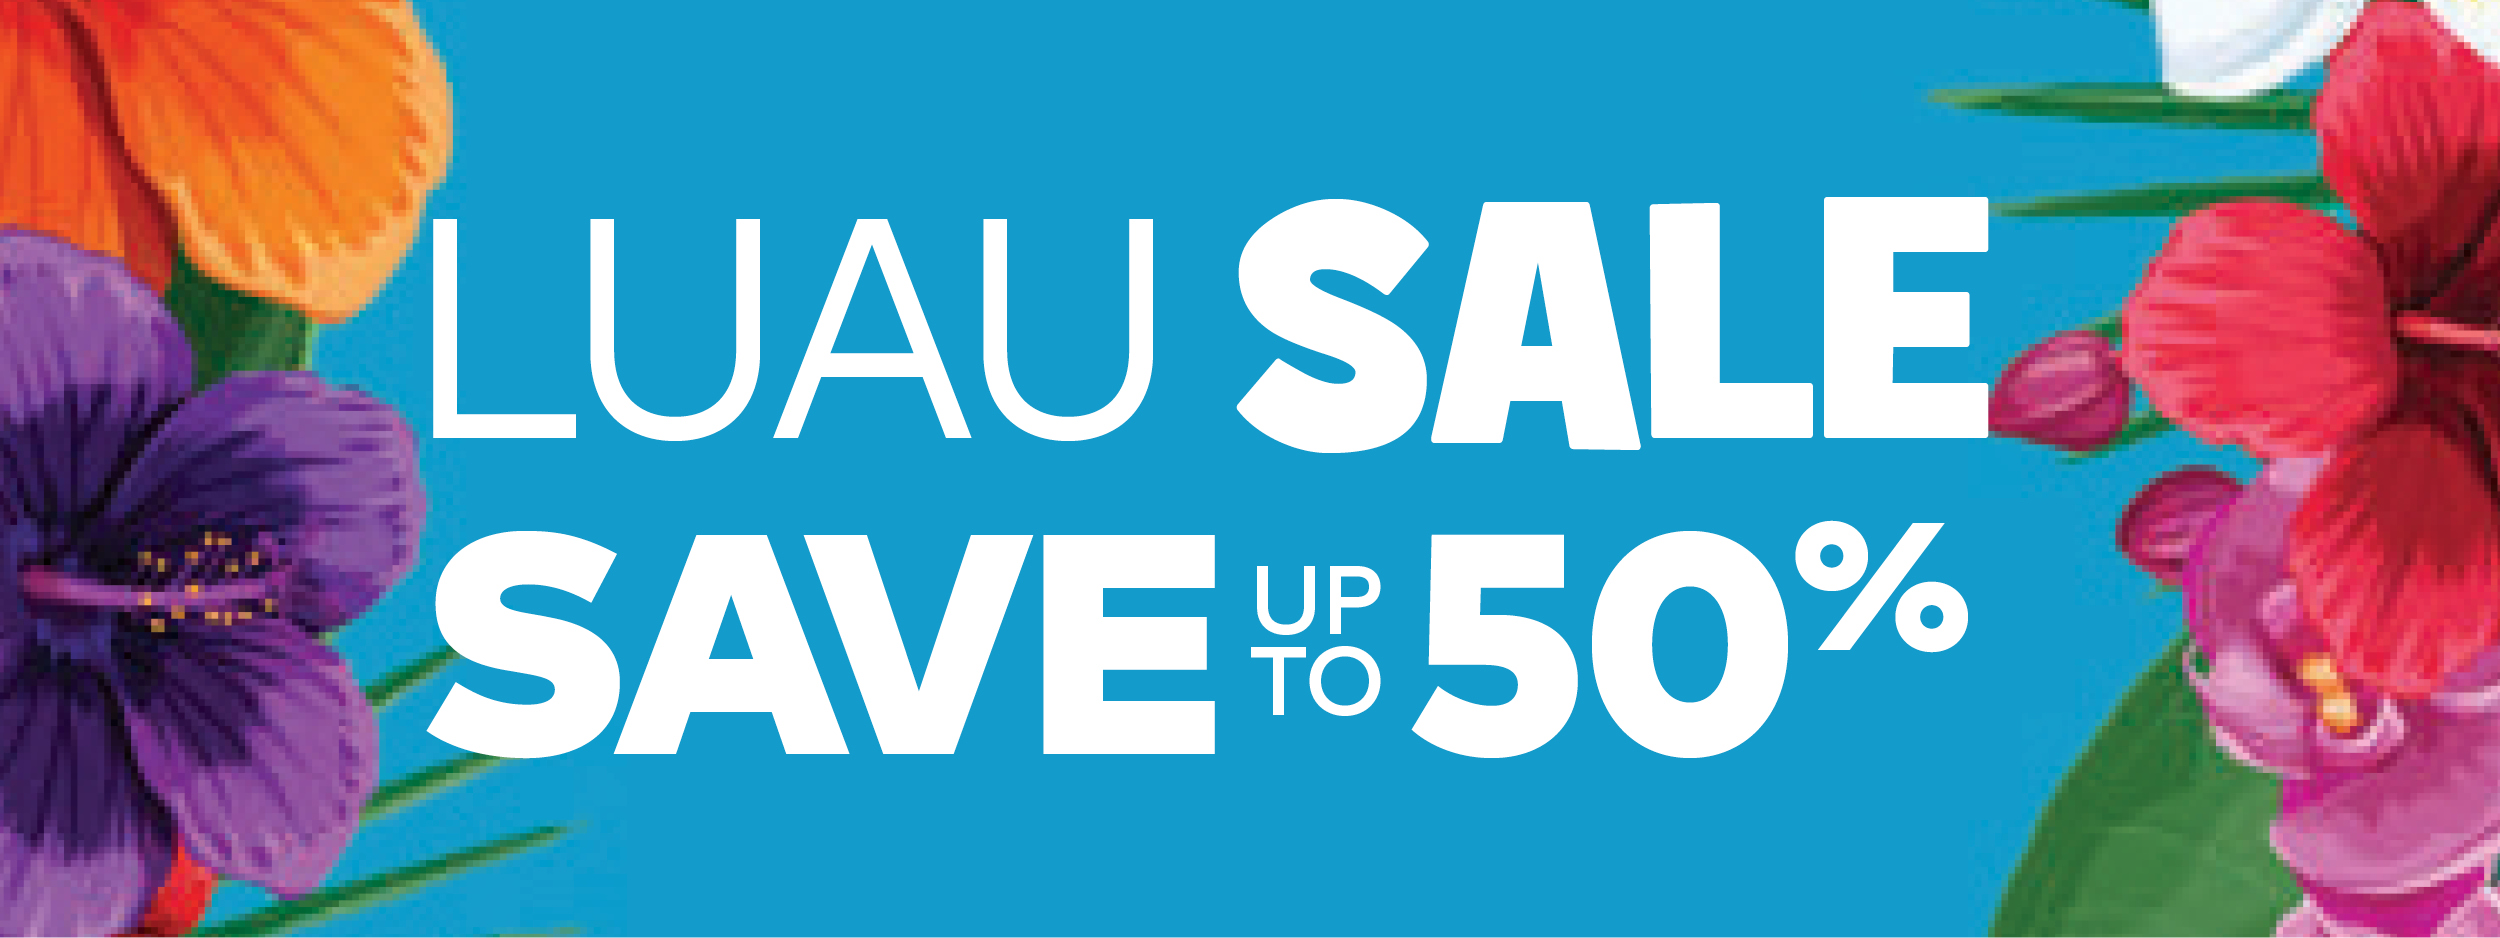 Luau Sale, Save Up to 50%